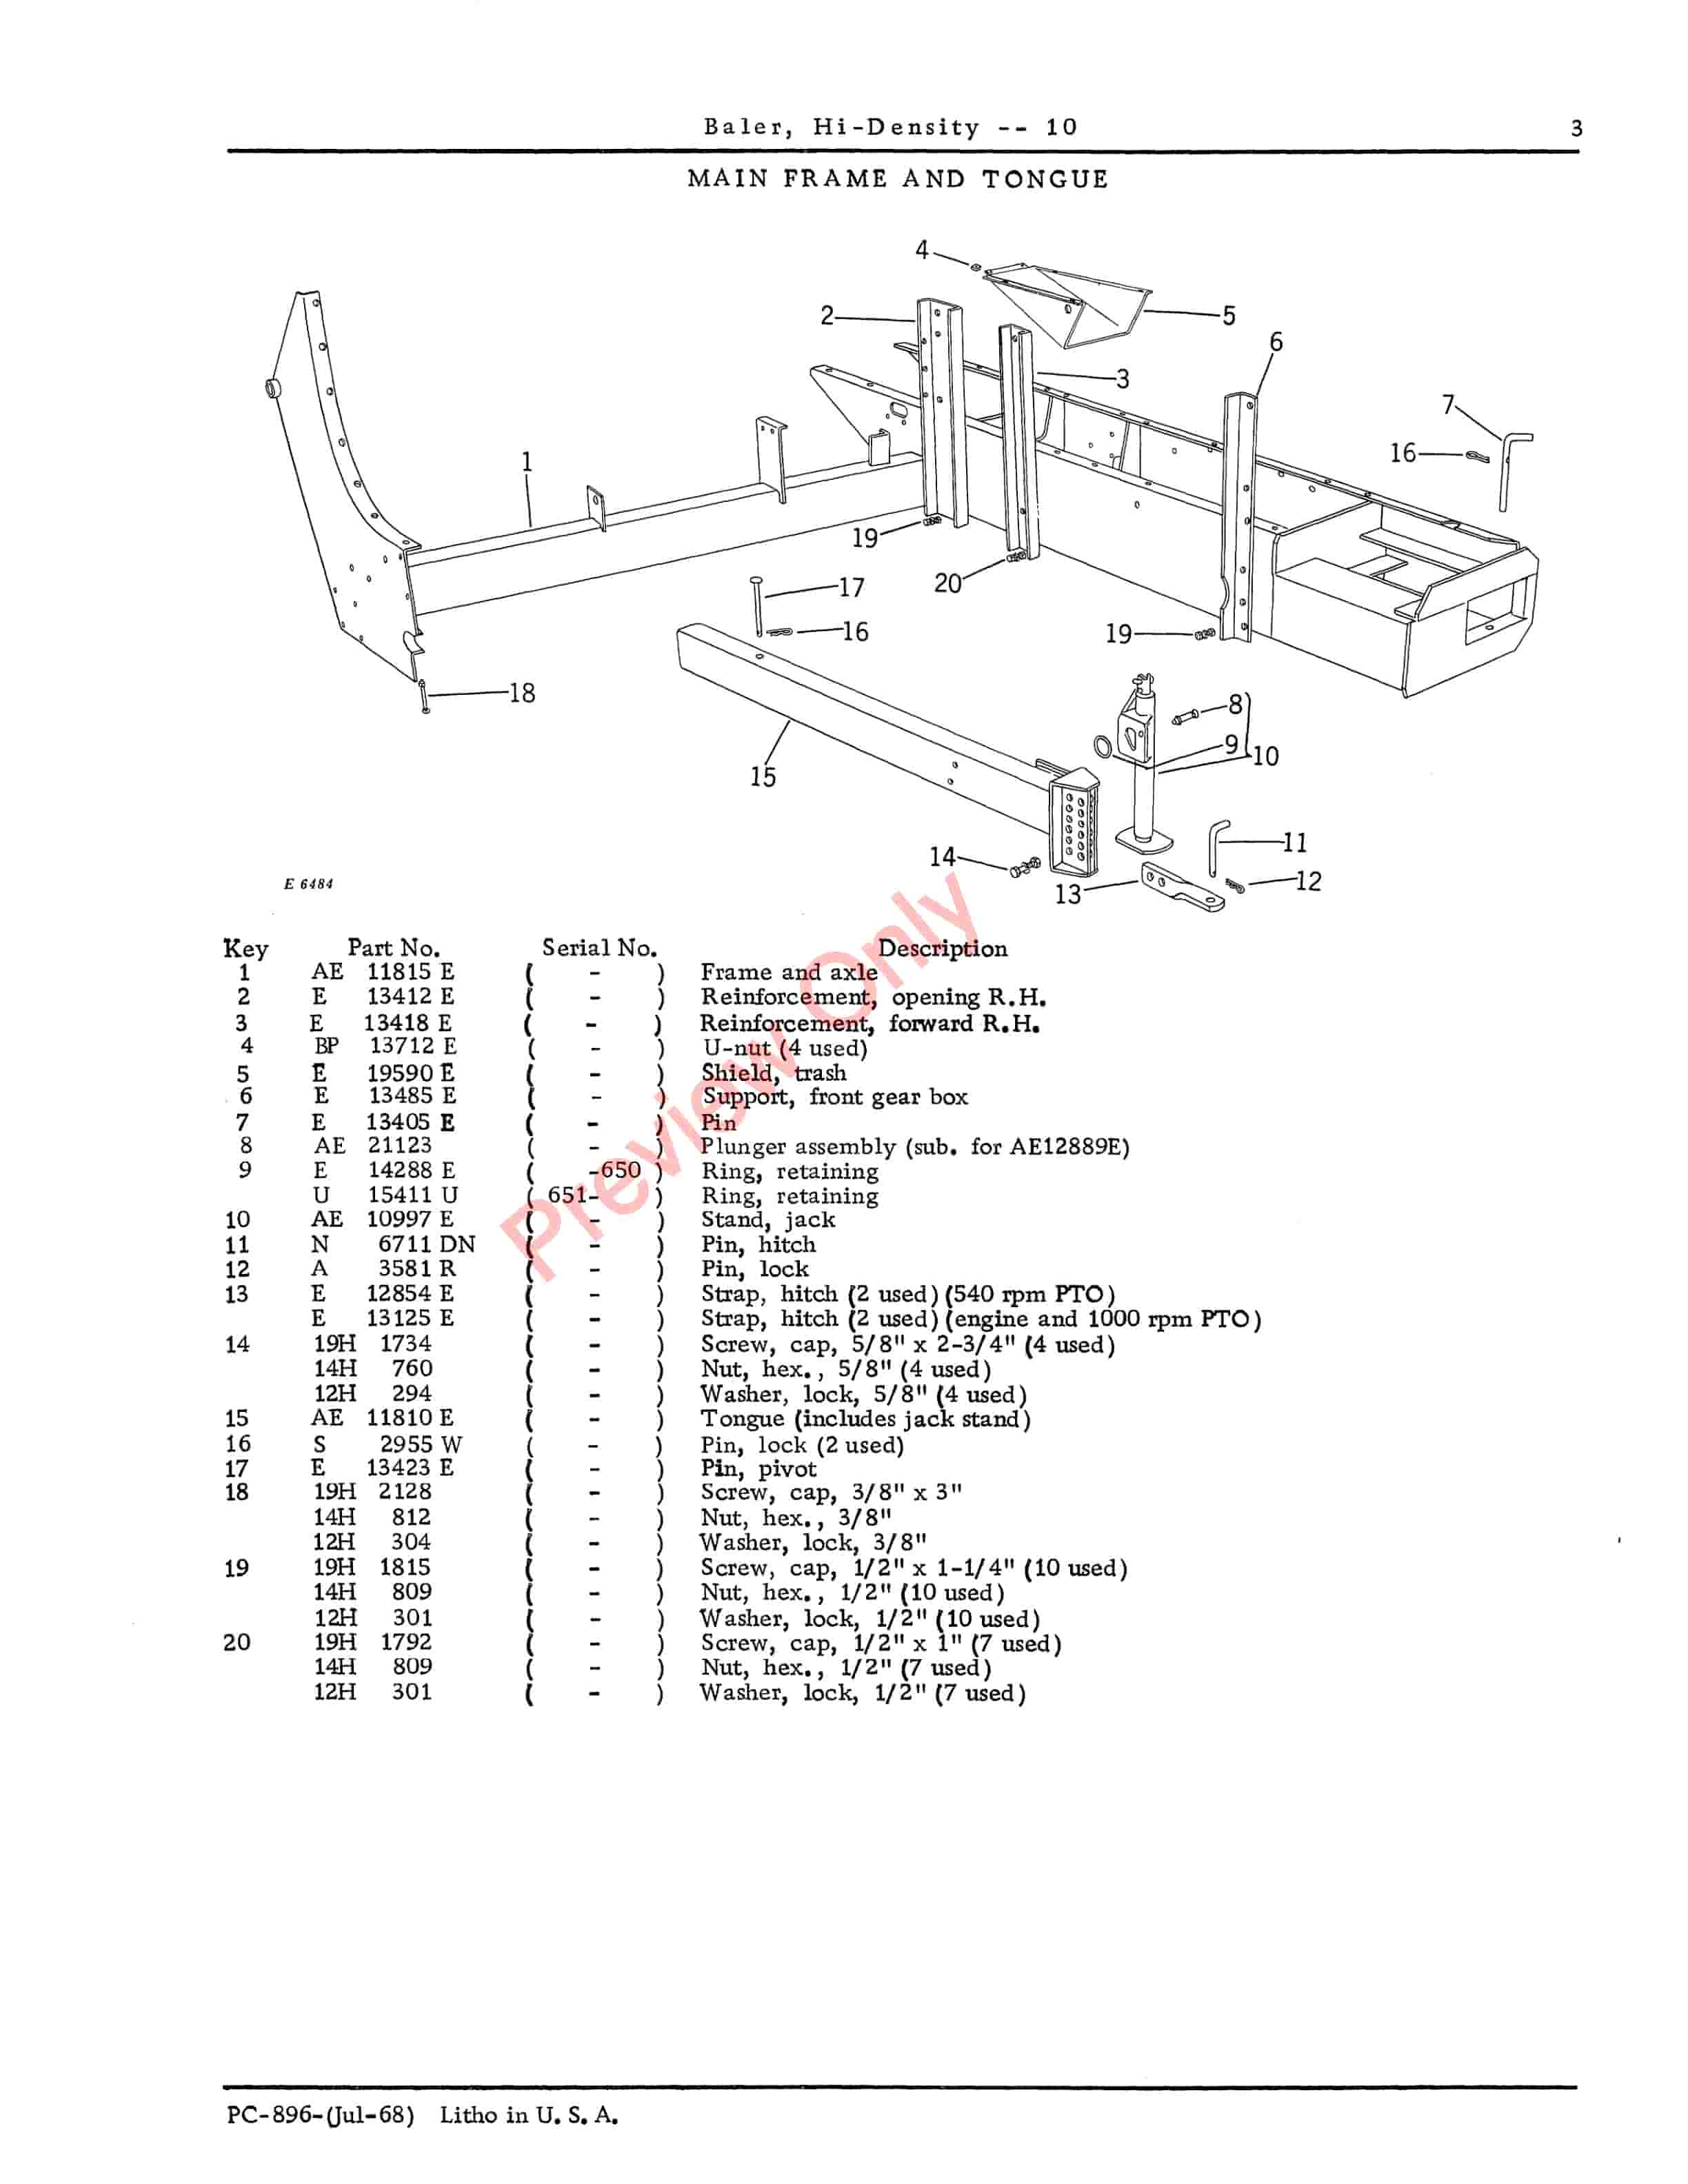 John Deere 10 Hi Density Baler Parts Catalog PC896 01JUL68-5